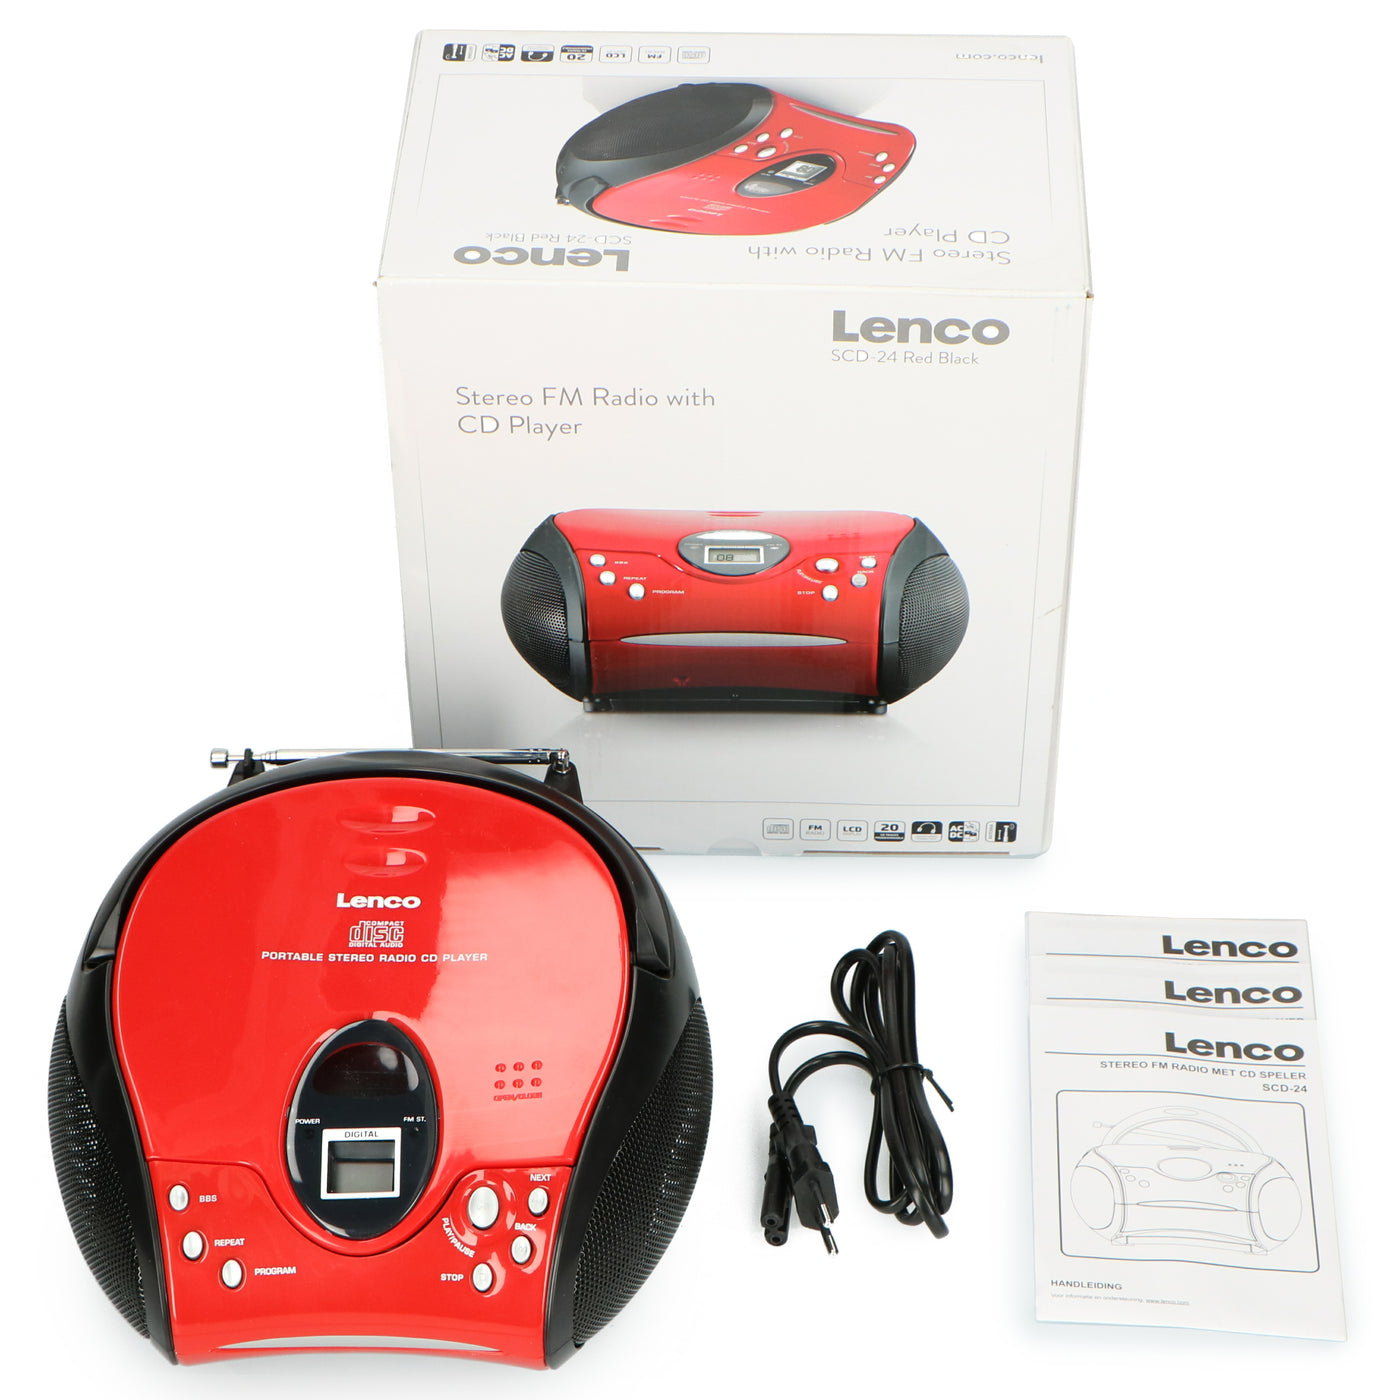 radio LENCO player SCD-24 CD Red Portable FM with – stereo - Red/Black - Lenco-Catalog